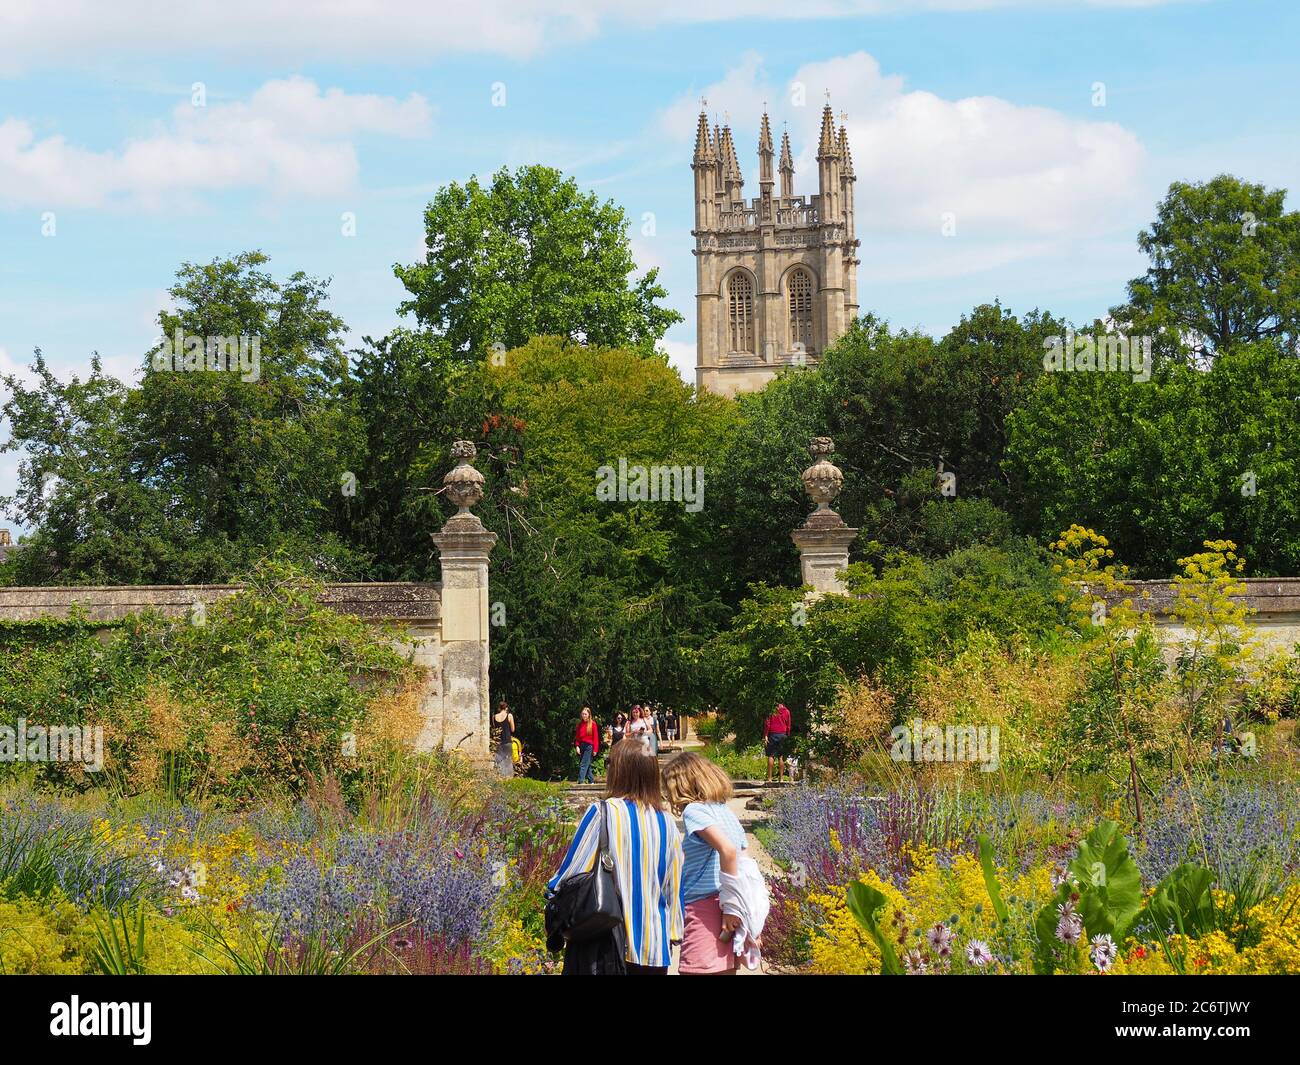 Oxford, UK. 12th July 2020. A warm, sunny day brings visitors to Oxford University's Botanic Garden. Credit: Angela Swann/Alamy Live News Stock Photo